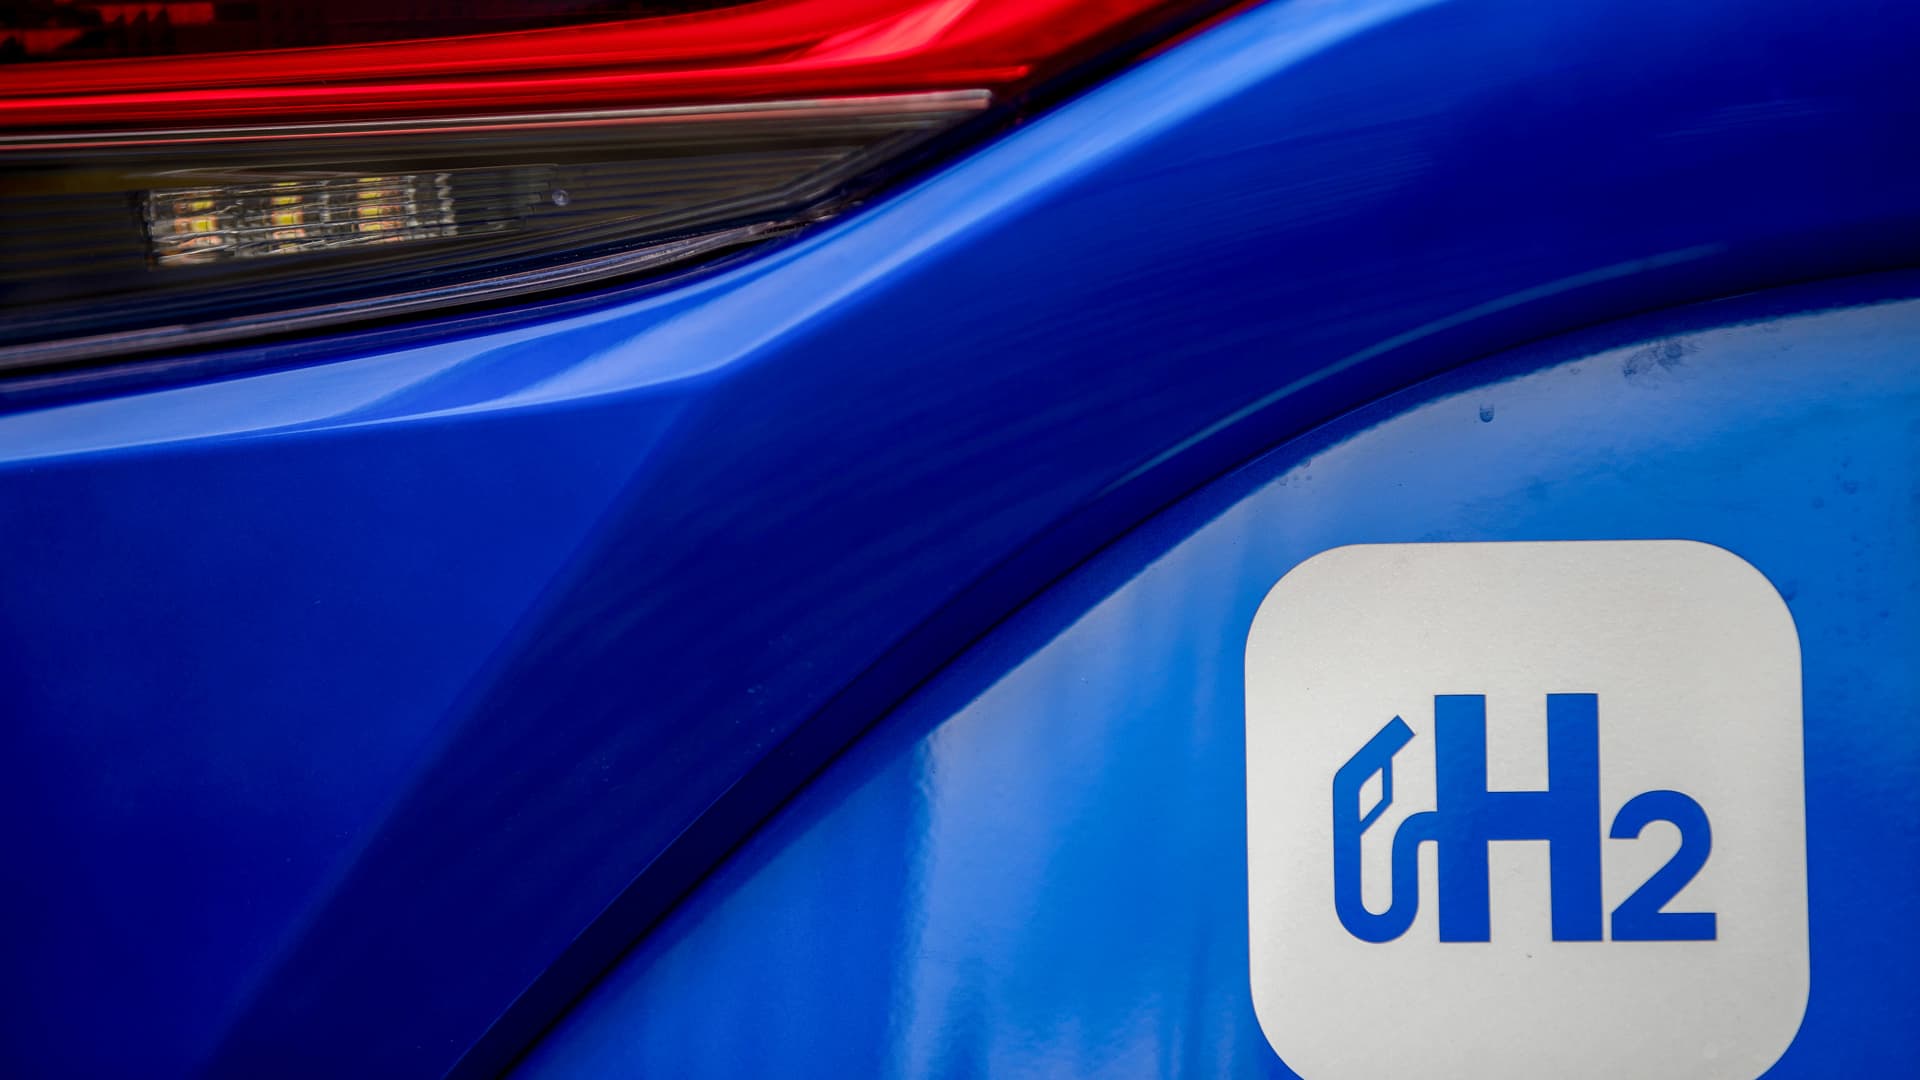 Toyota plans to develop light duty hydrogen fuel-cell trucks